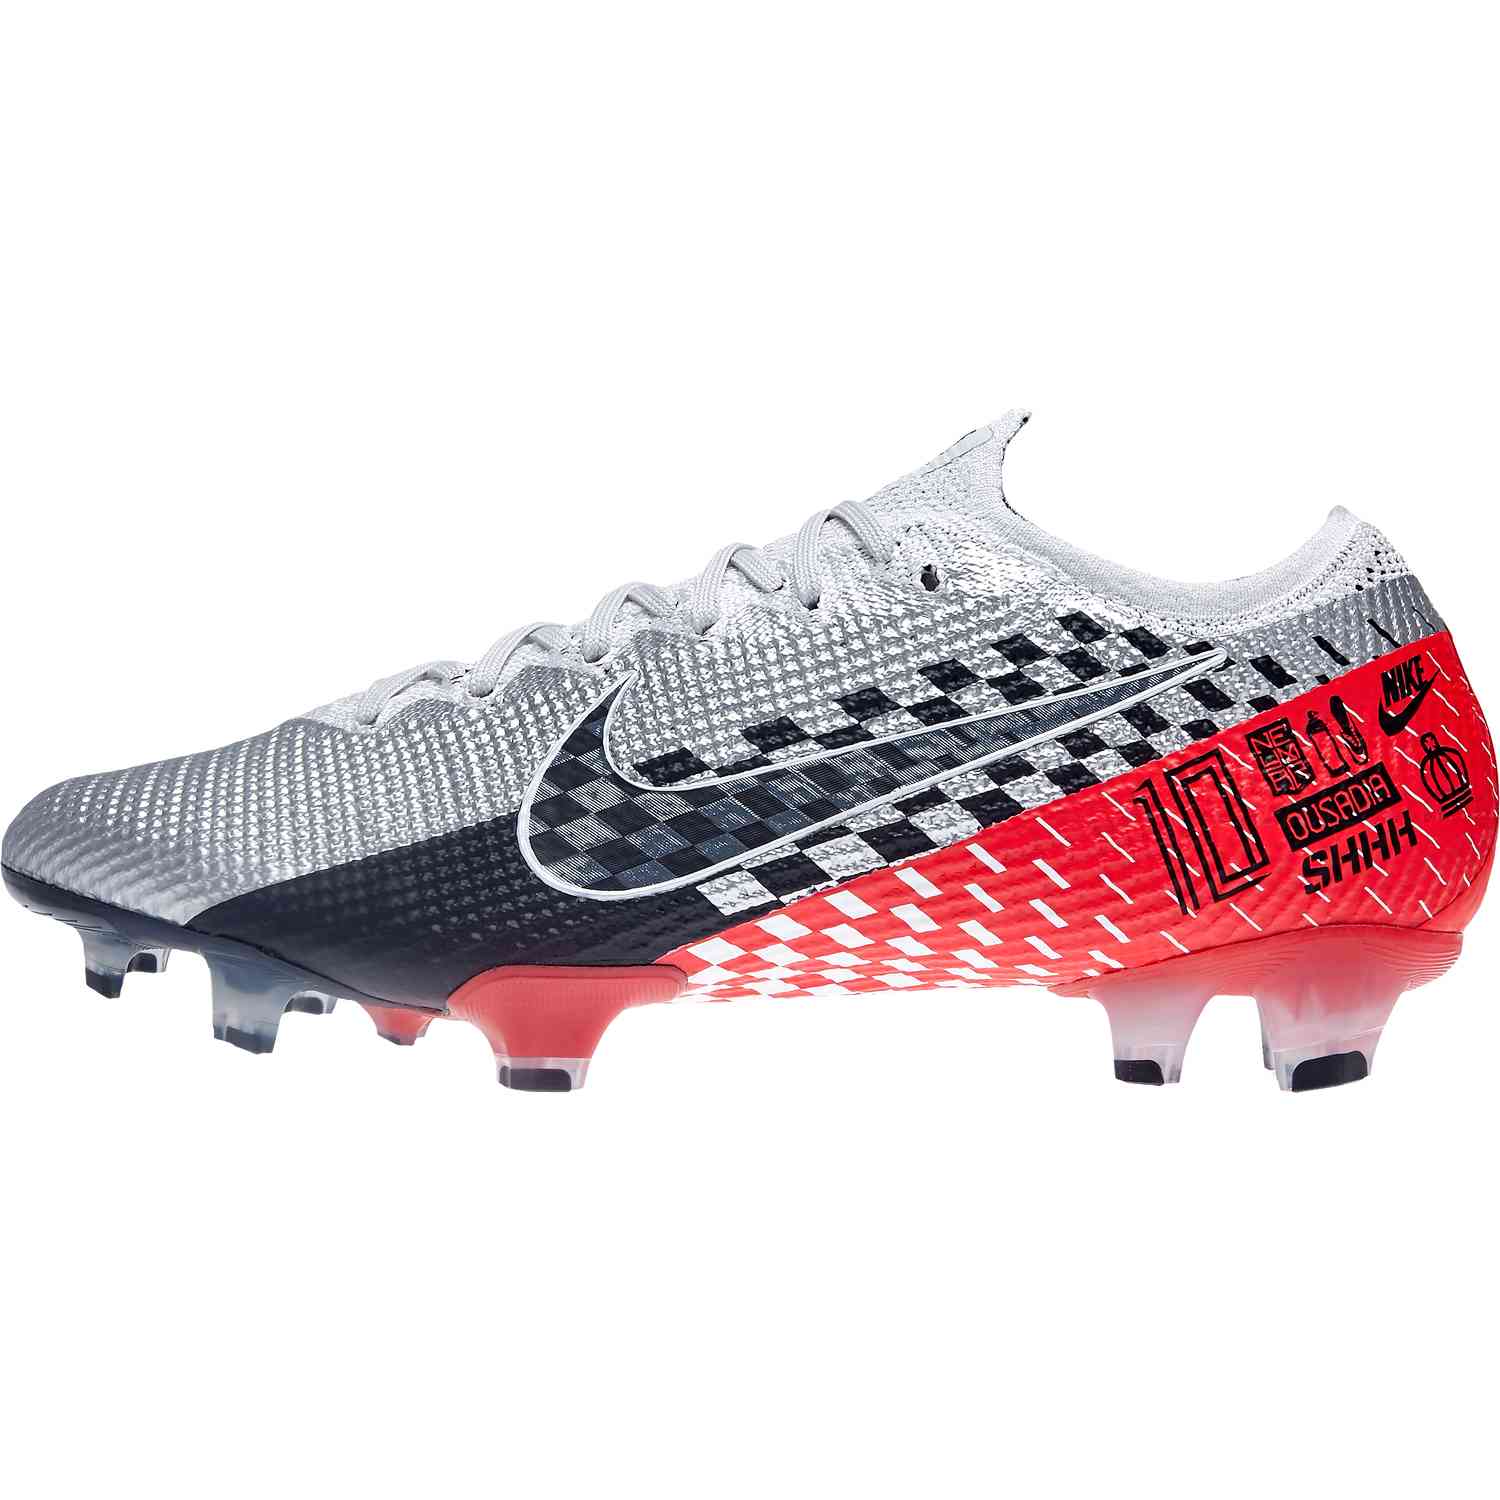 New Football Boots of CR7 Neymar Nike Mercurial Superfly